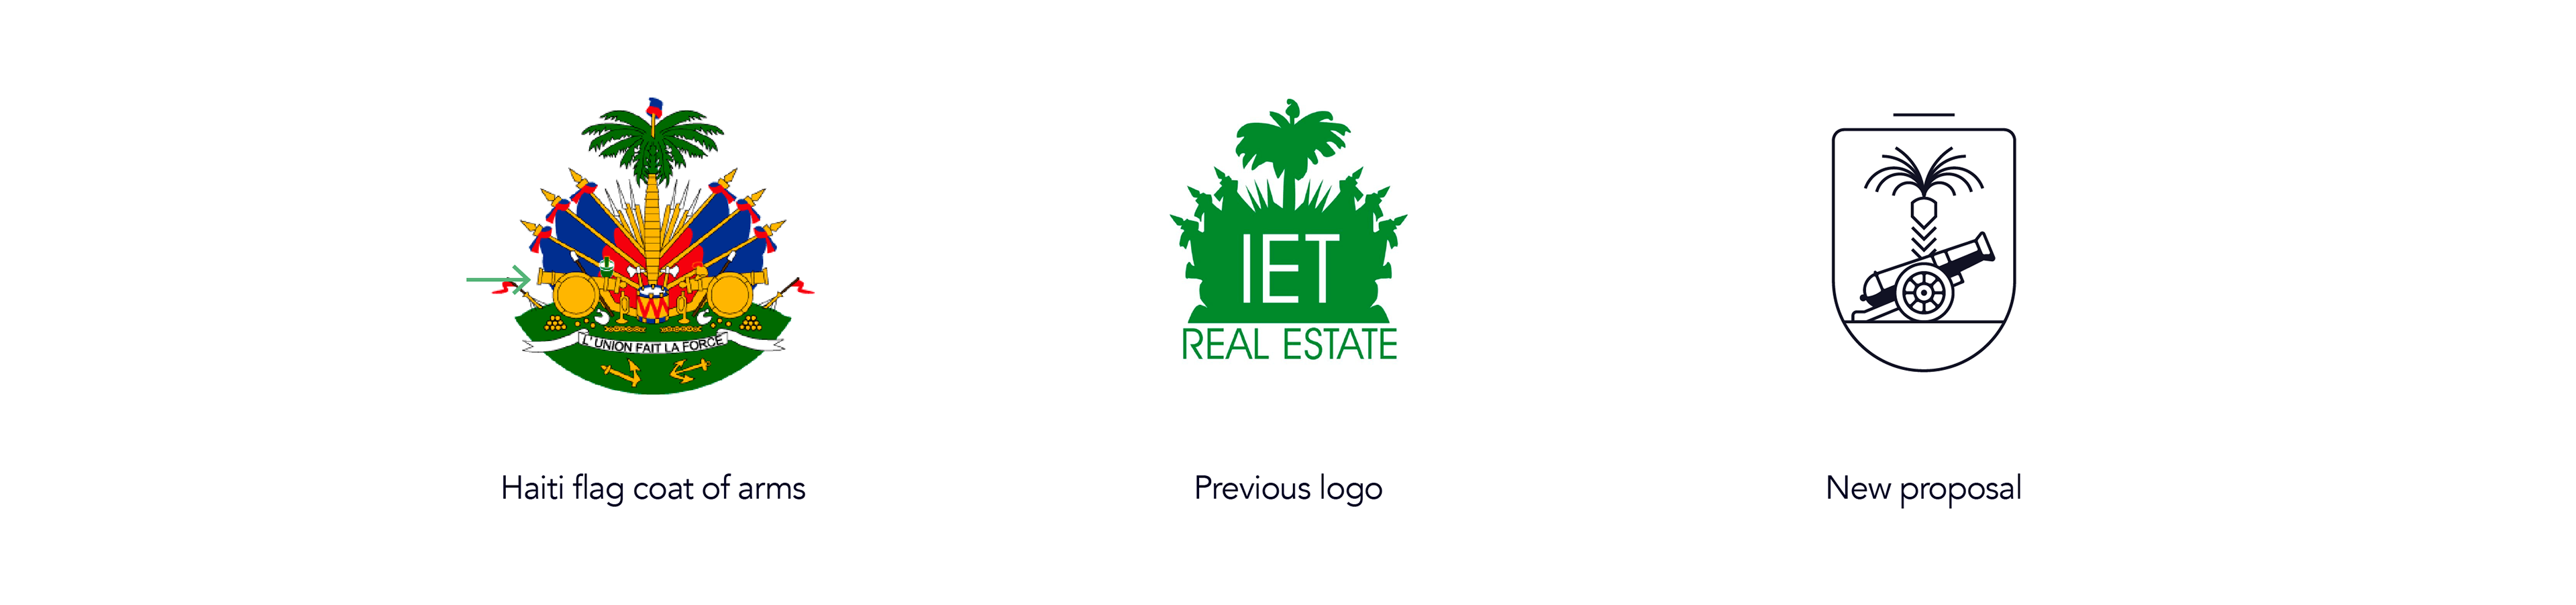 Haiti Coatof Armsand Real Estate Logos